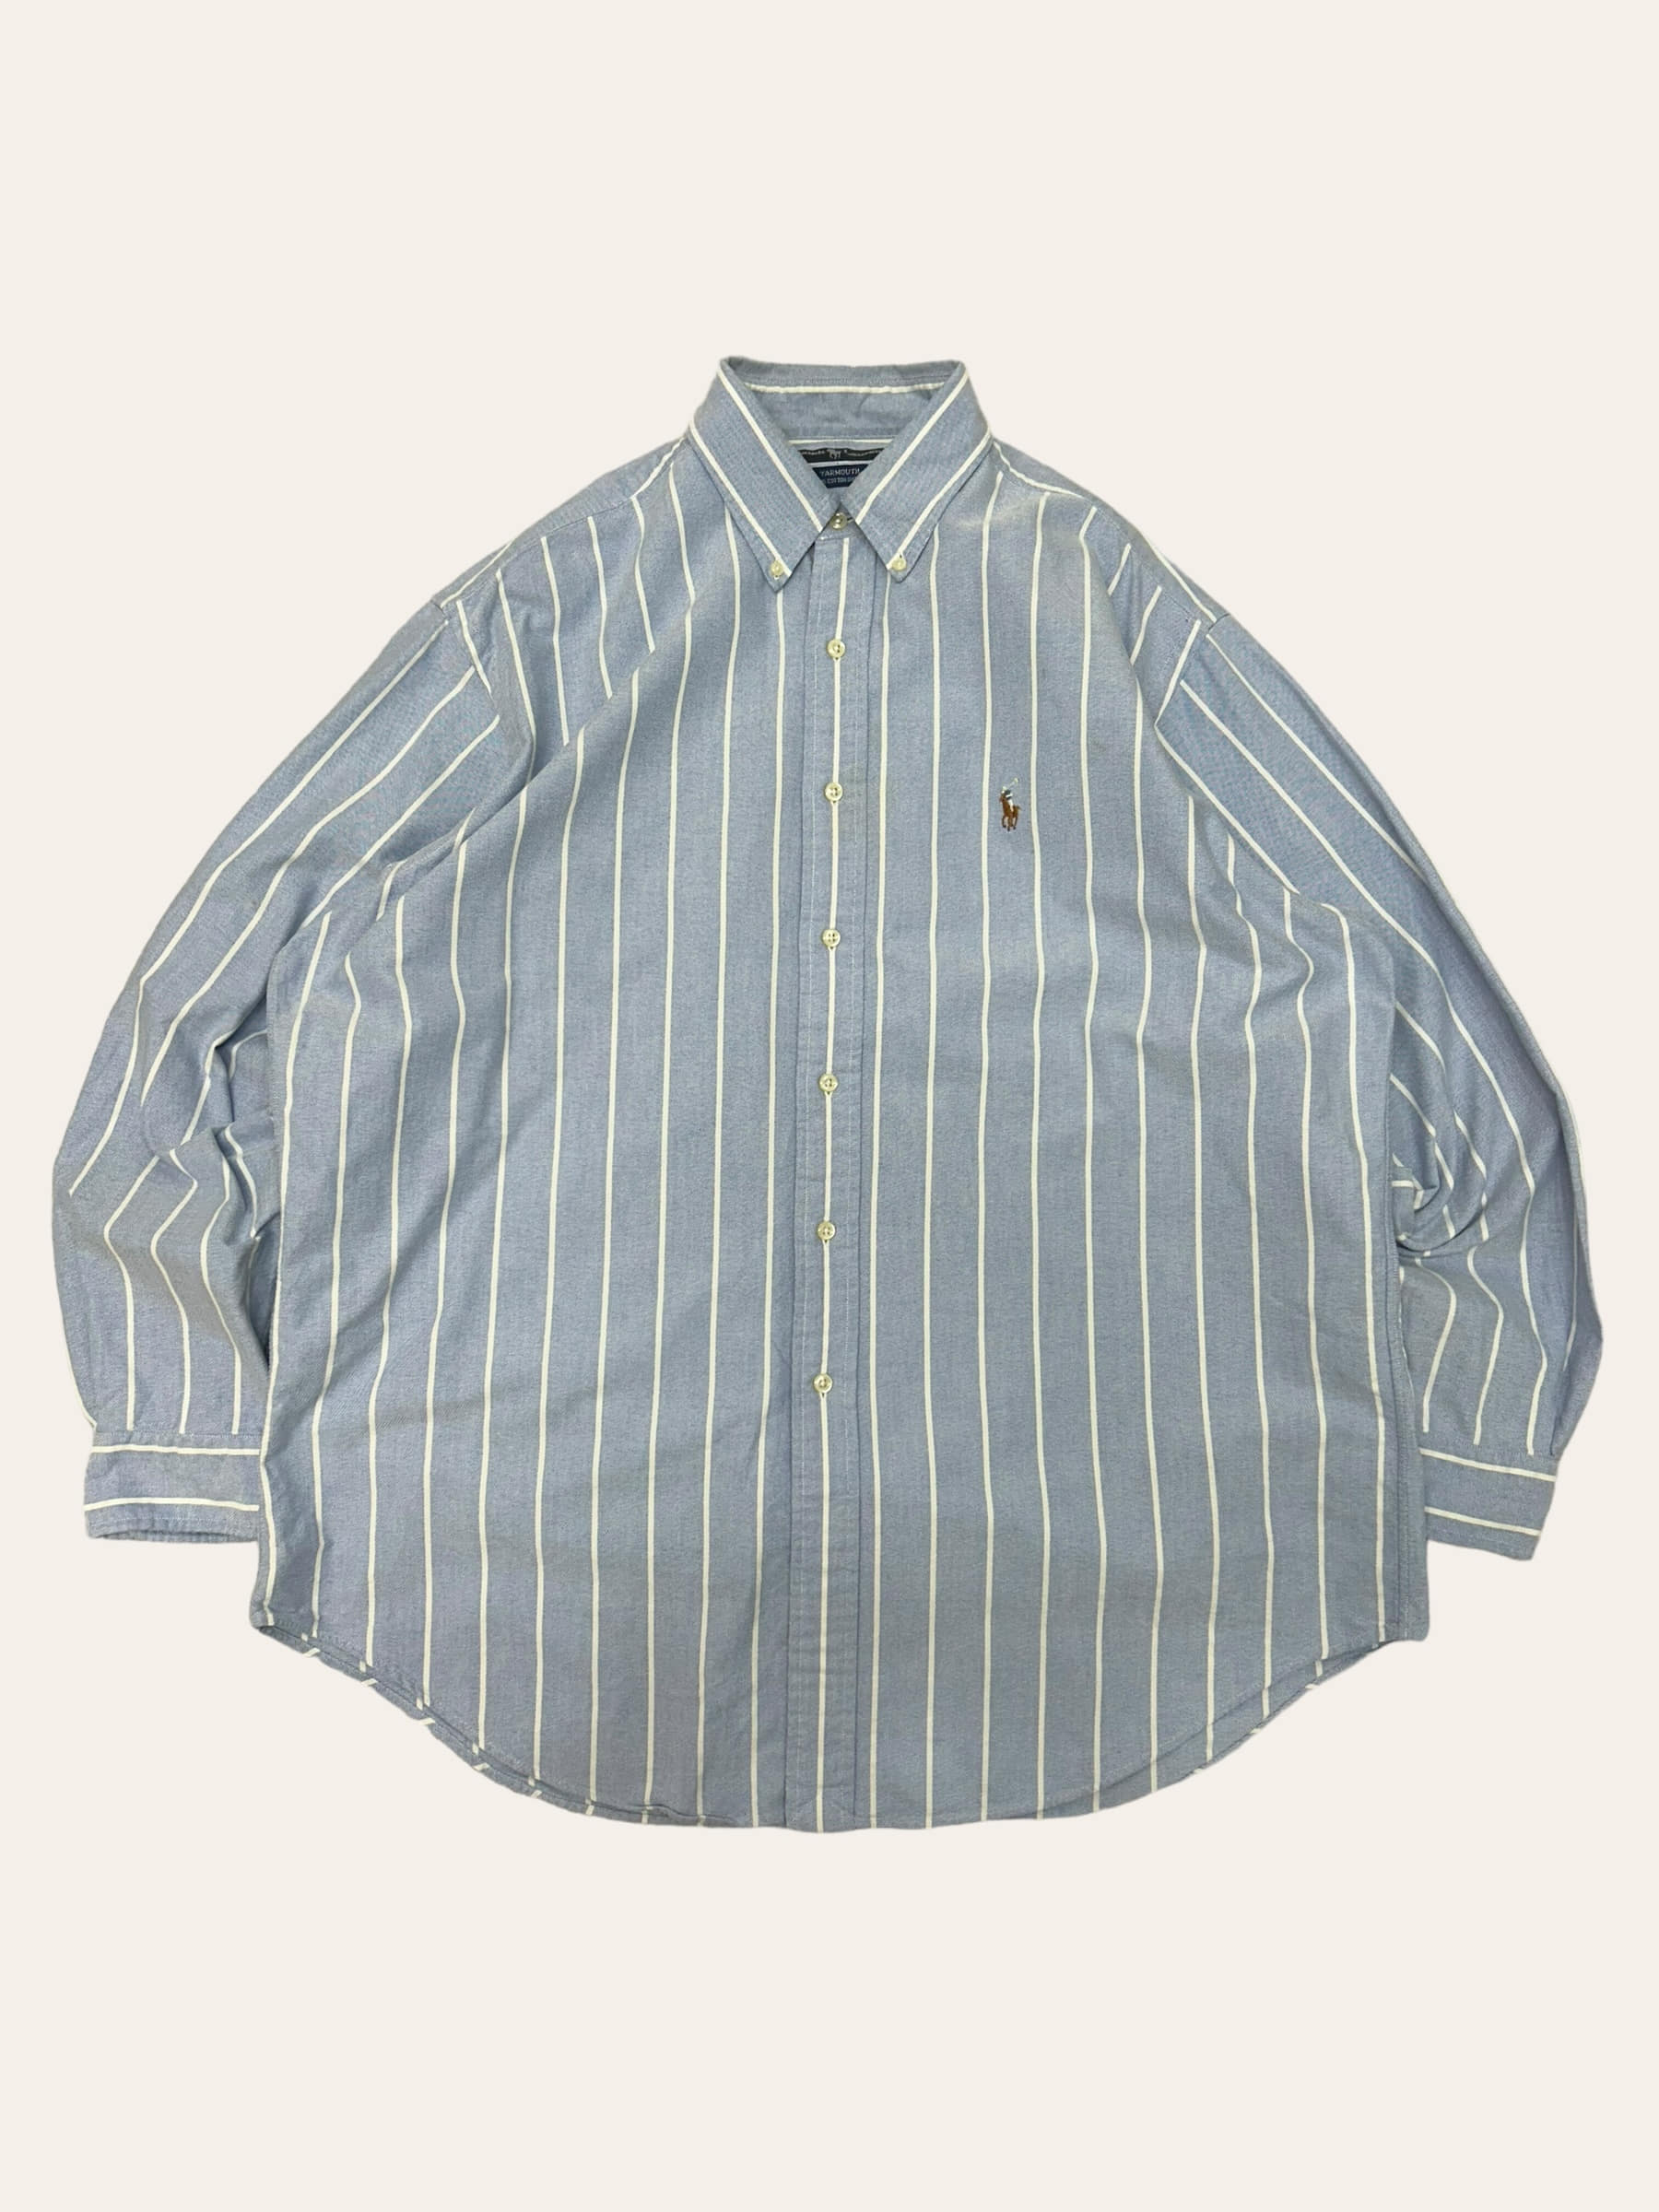 (From USA)Polo ralph lauren blue stripe oxford shirt 16.5